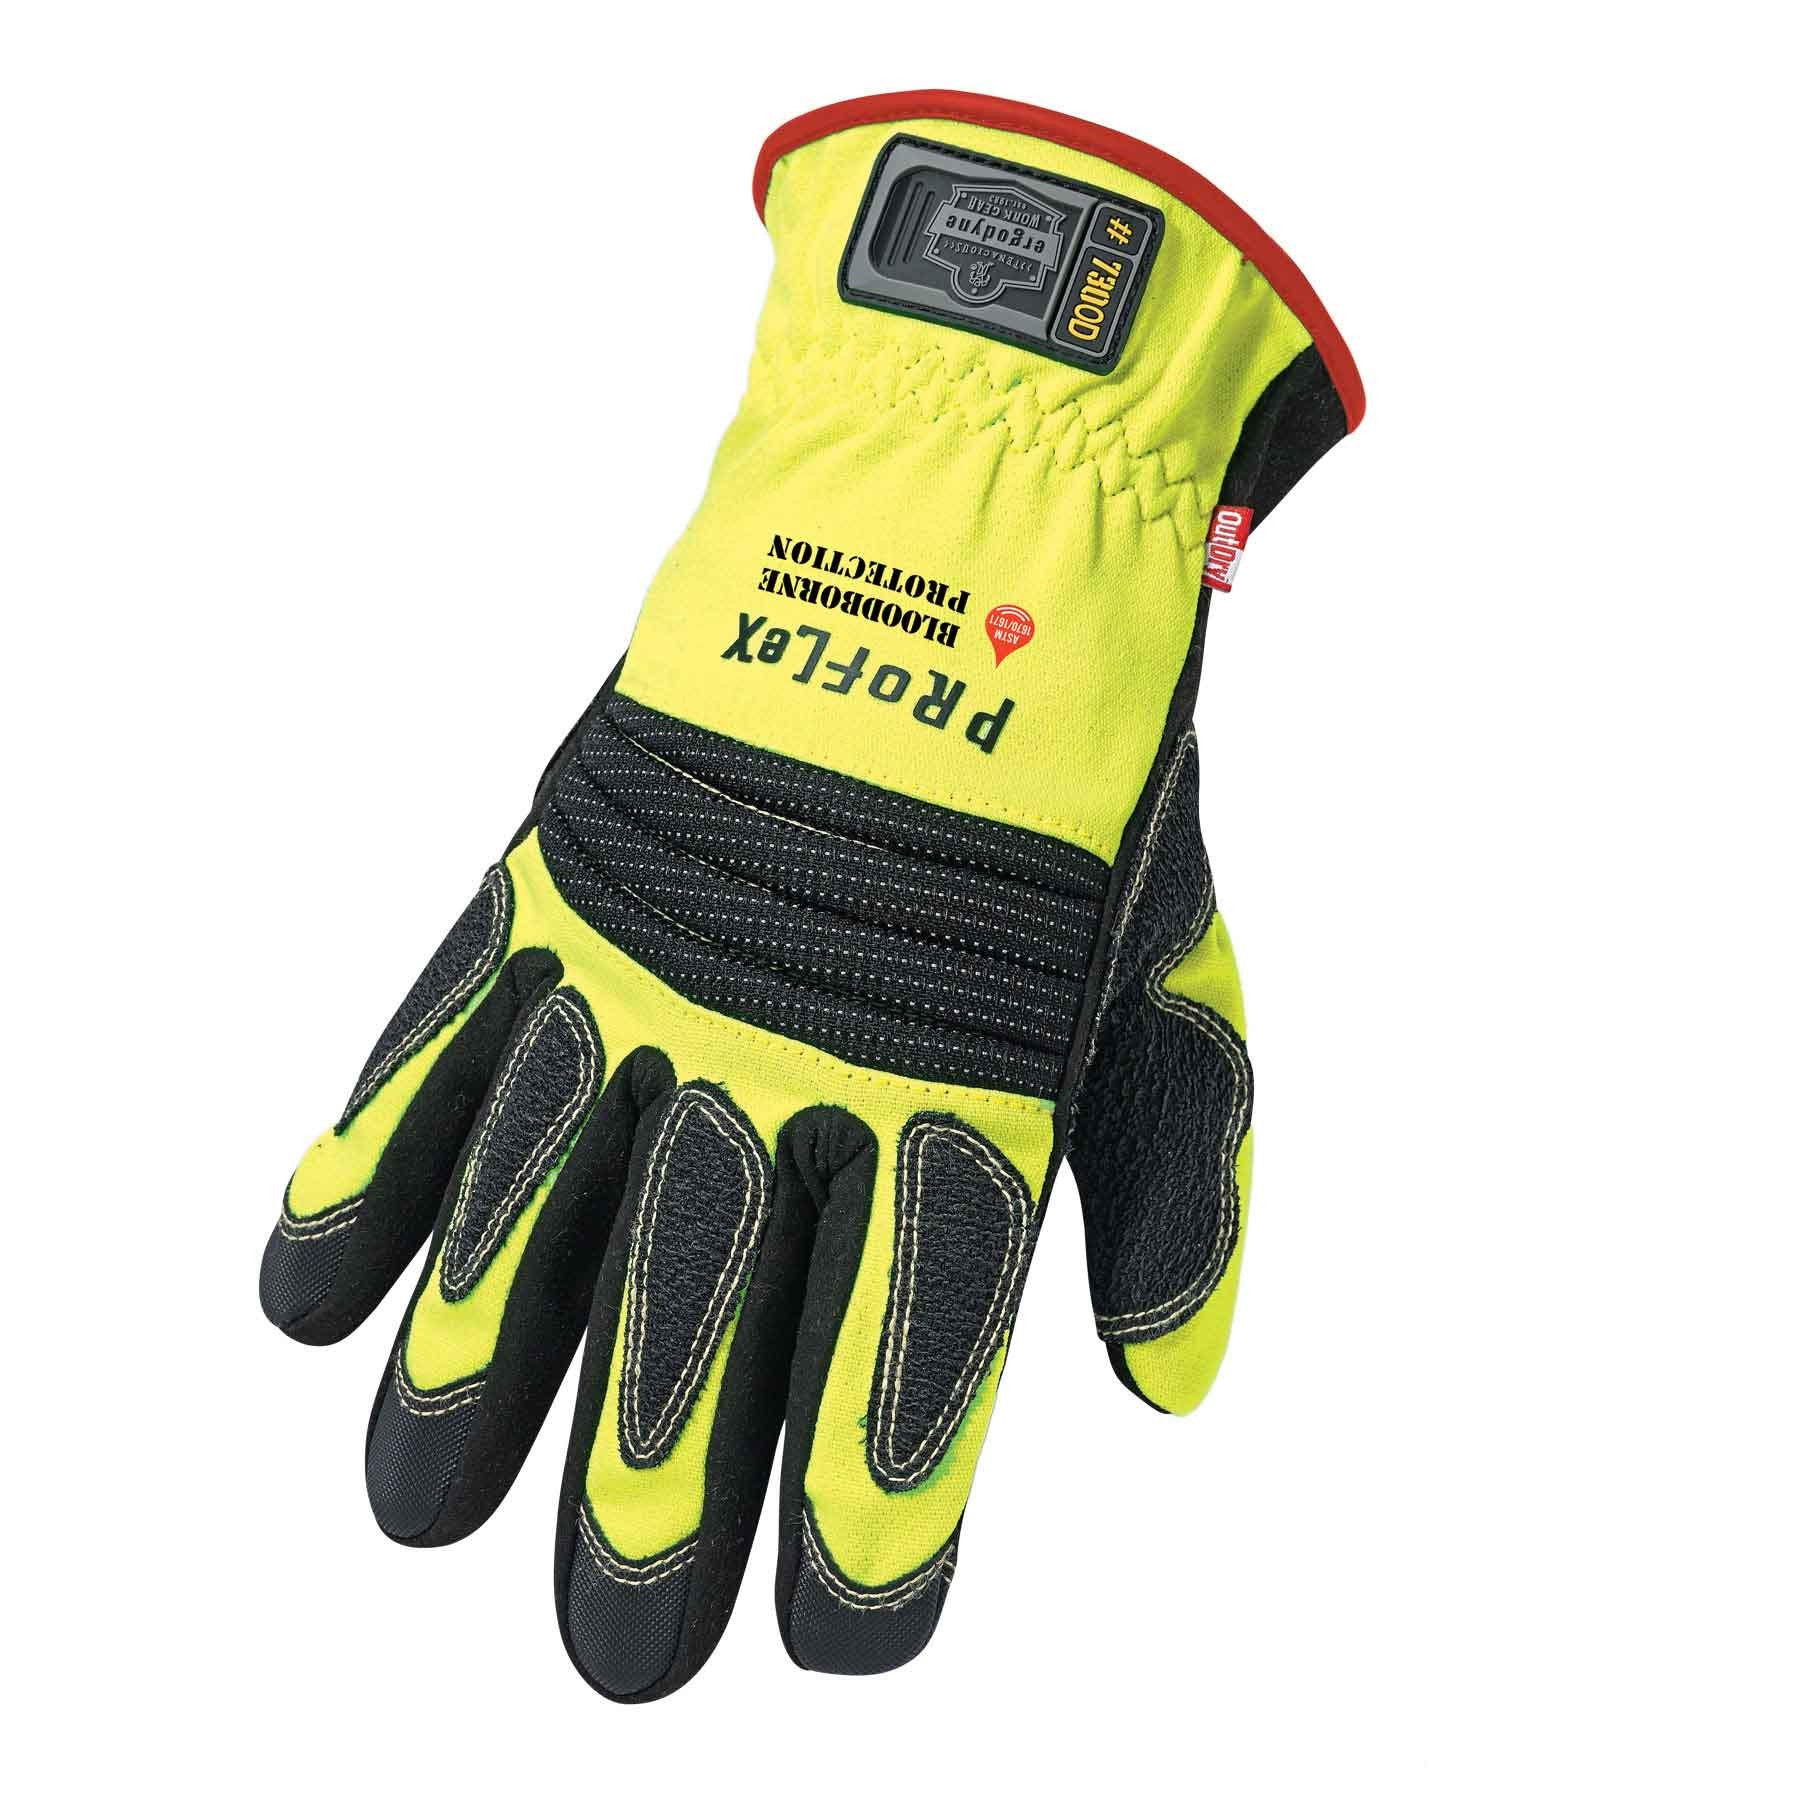 ProFlex 730OD Fire & Rescue Performance Gloves w/ OutDry Bloodborne Pathogen Protection-eSafety Supplies, Inc